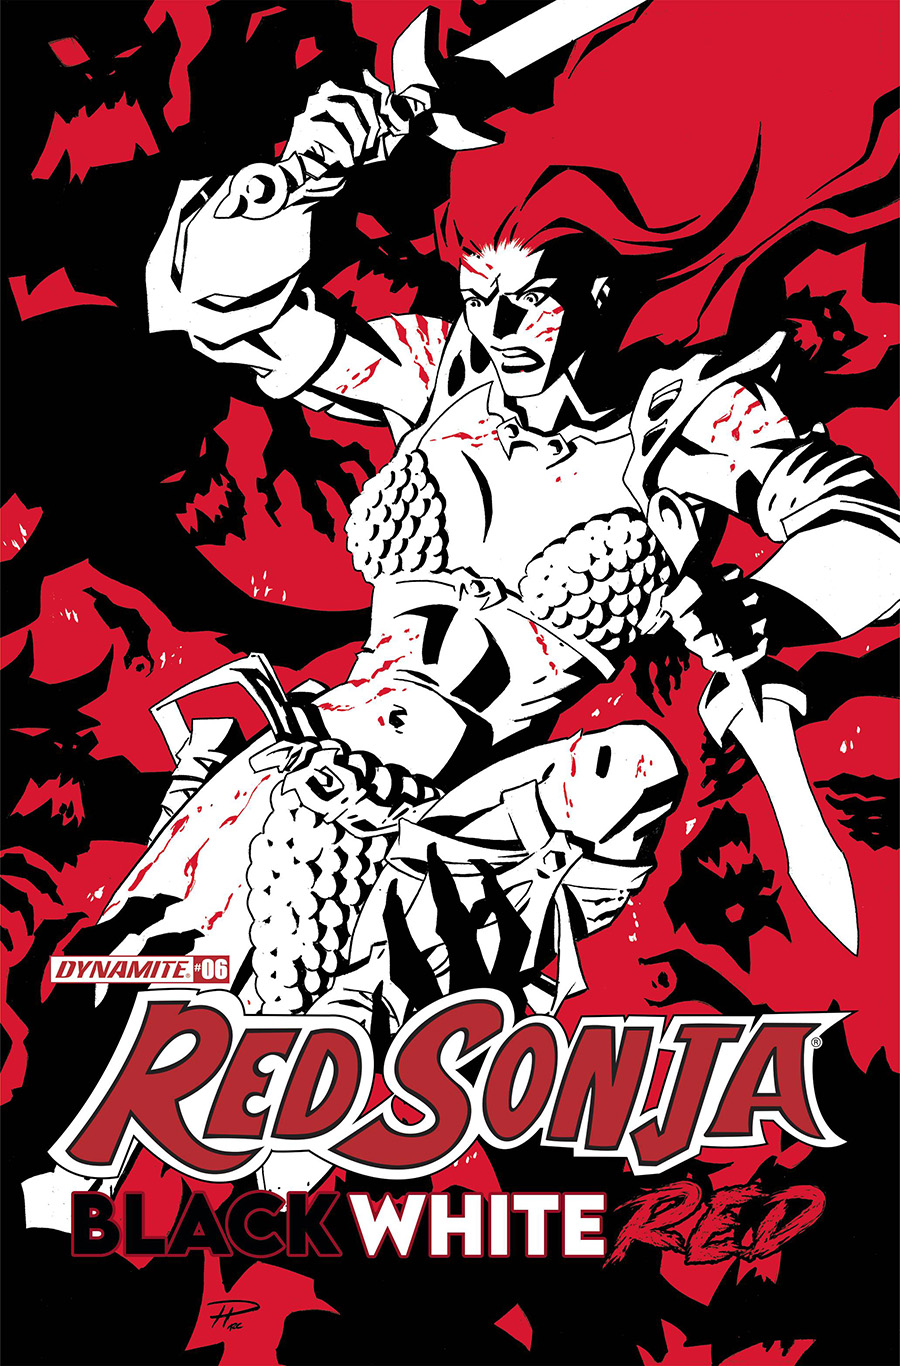 Red Sonja Black White Red #7 Cover A Regular Phil Hester Cover